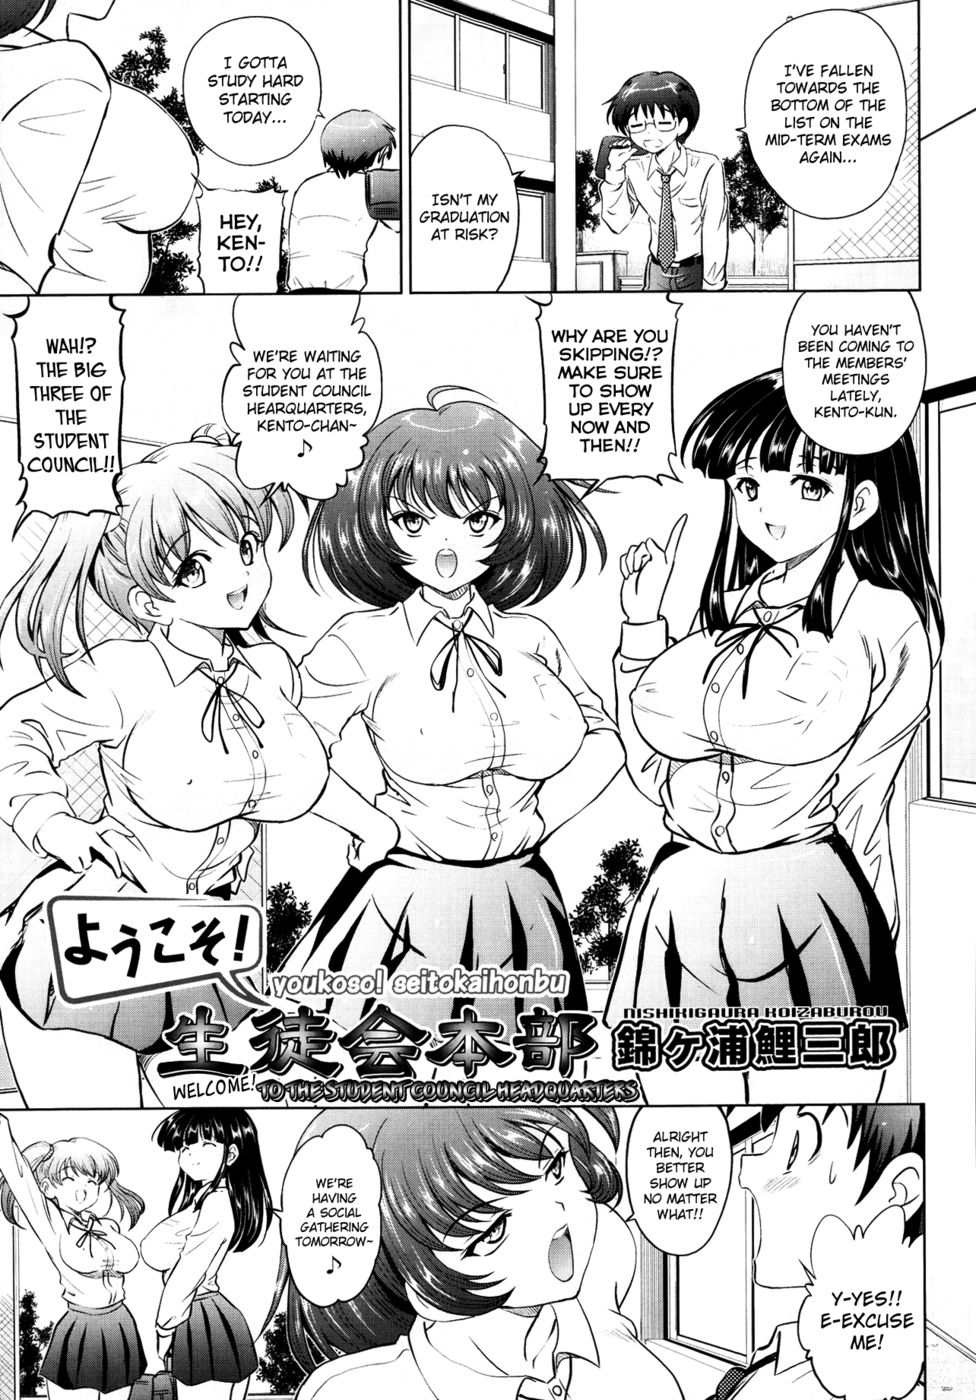 Hentai Manga Comic-Welcome! To the Student Council Headquarters-Read-1